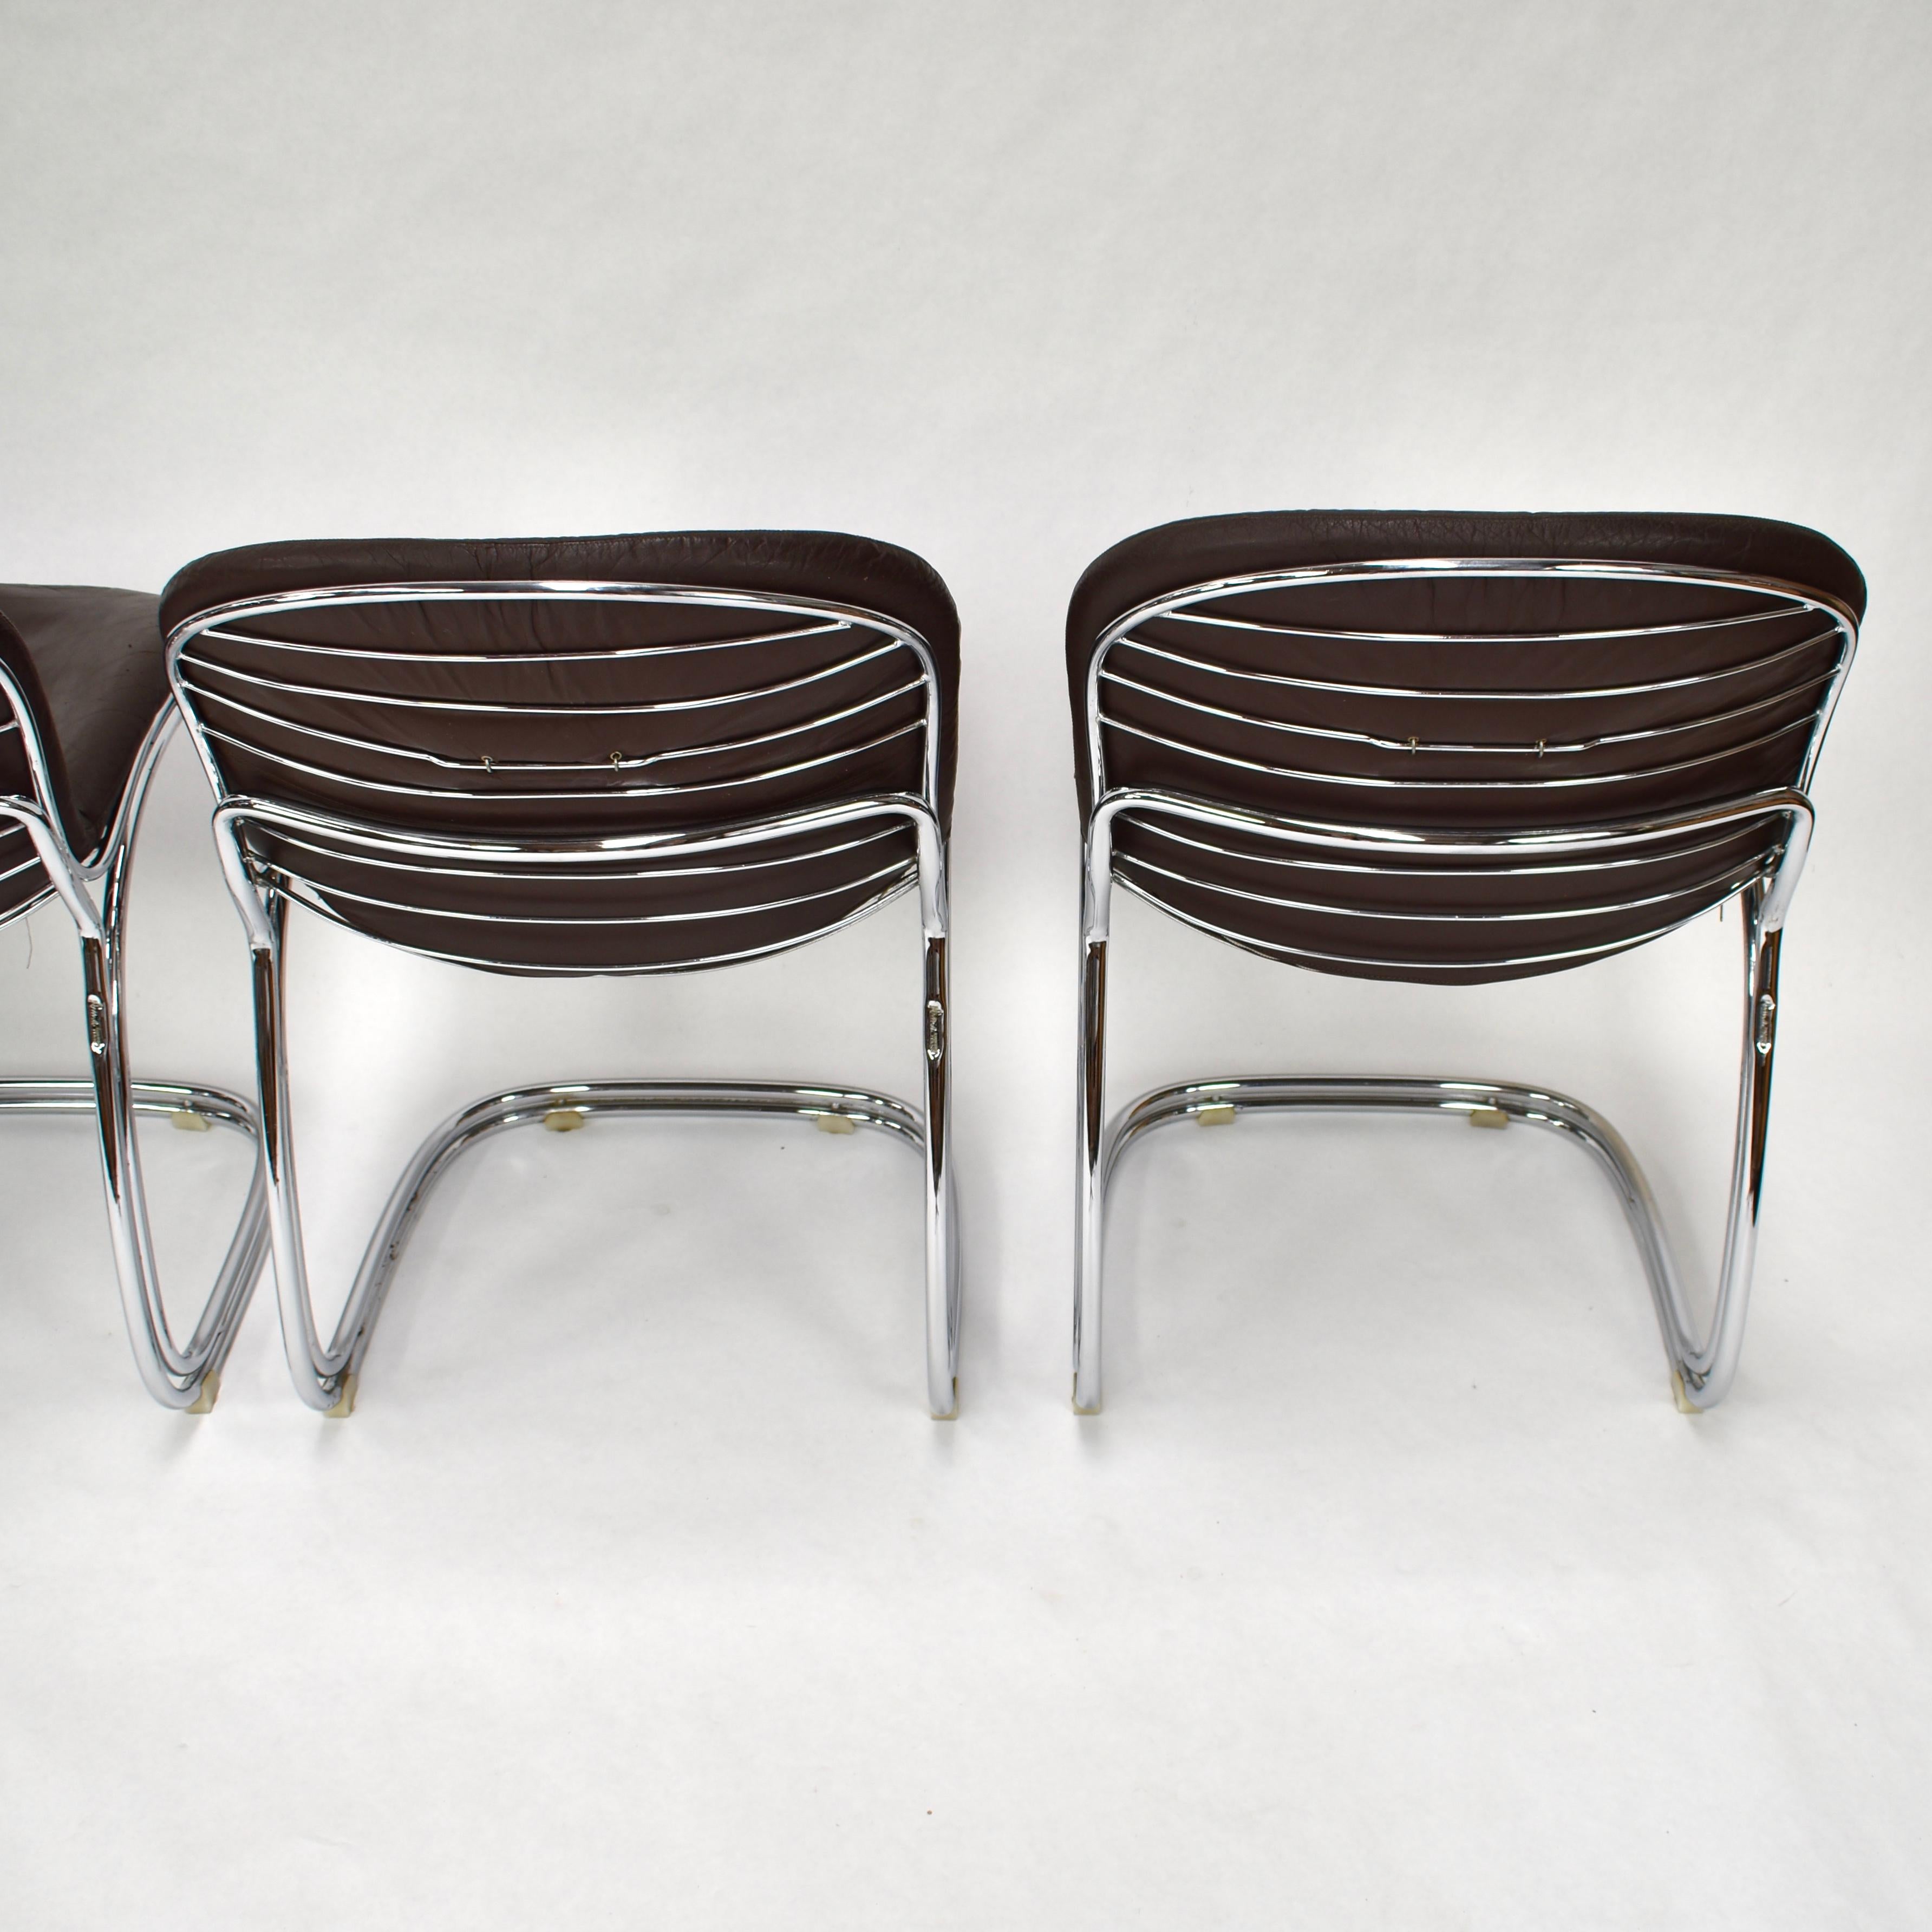 Gastone Rinaldi 'Sabrina' Chocolate Brown Leather Chairs for RIMA, Italy 1